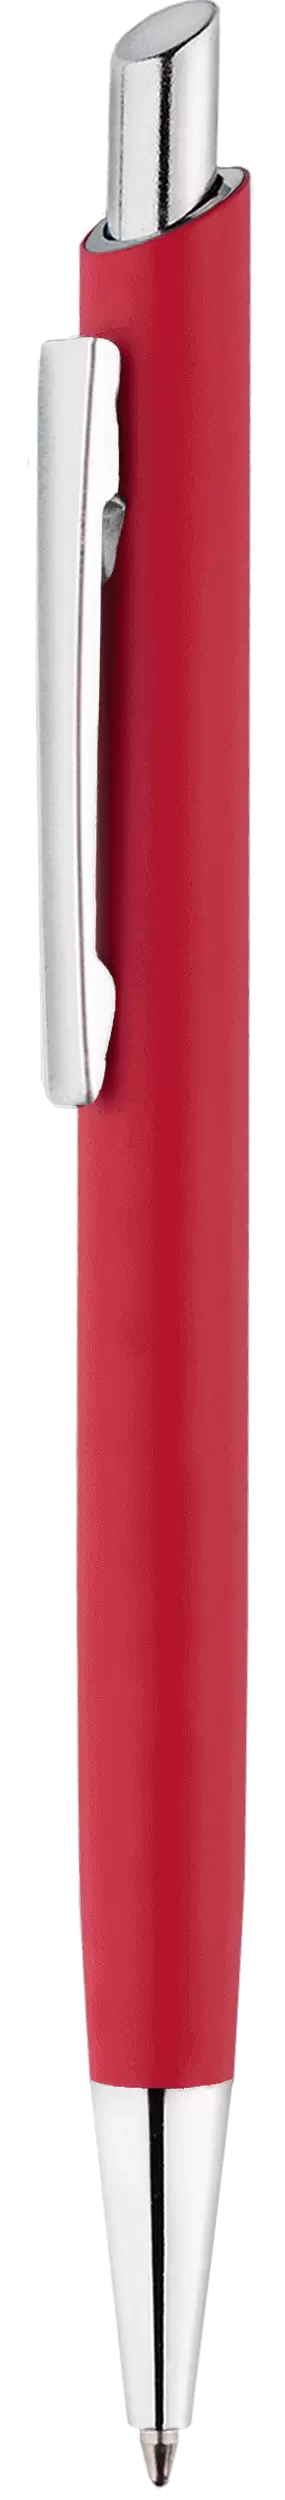 Ручка ELFARO SOFT Красная 3053-03